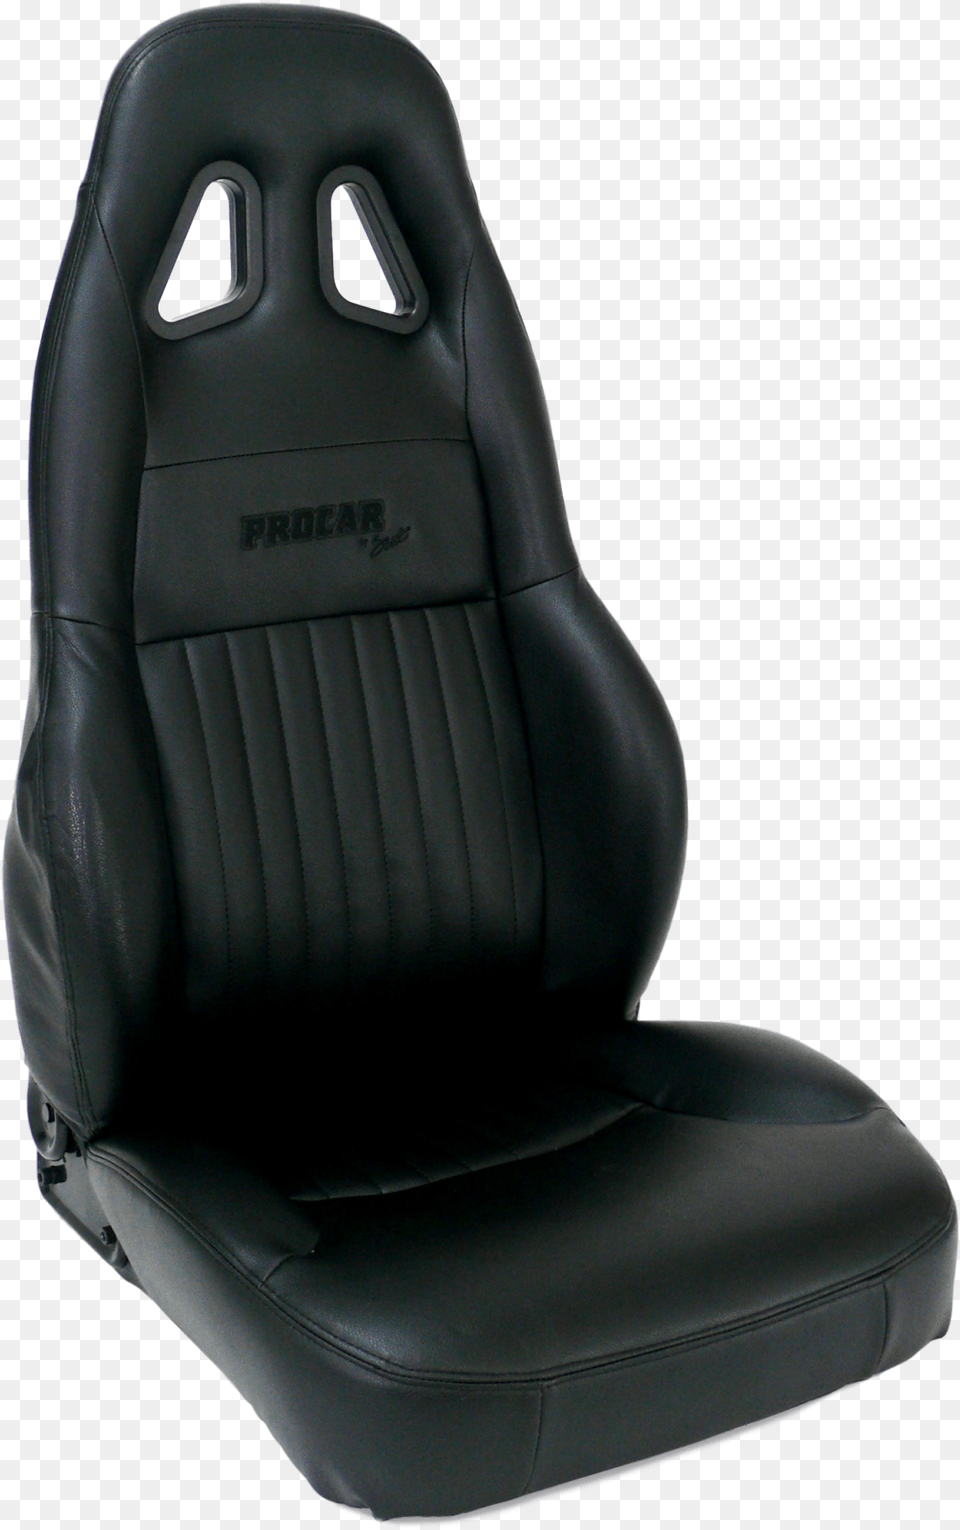 Series 1614 Black Vinyl Car Seat, Cushion, Home Decor, Transportation, Vehicle Free Png